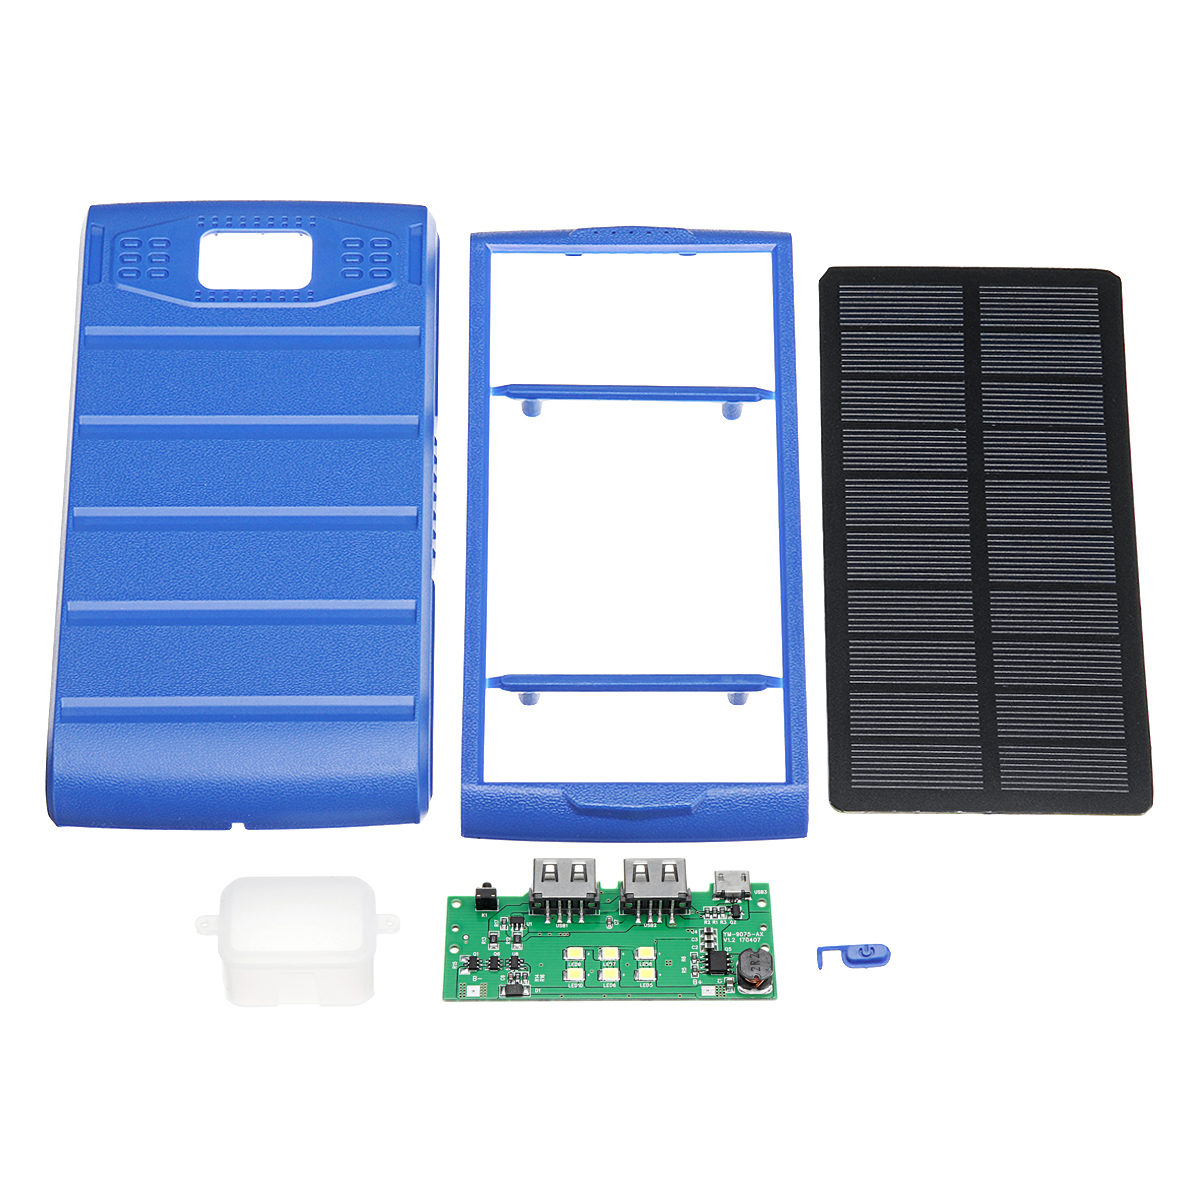 

Solar LED Dual USB Power Bank DIY 2 x 7566121 External Battery Charger Box Case